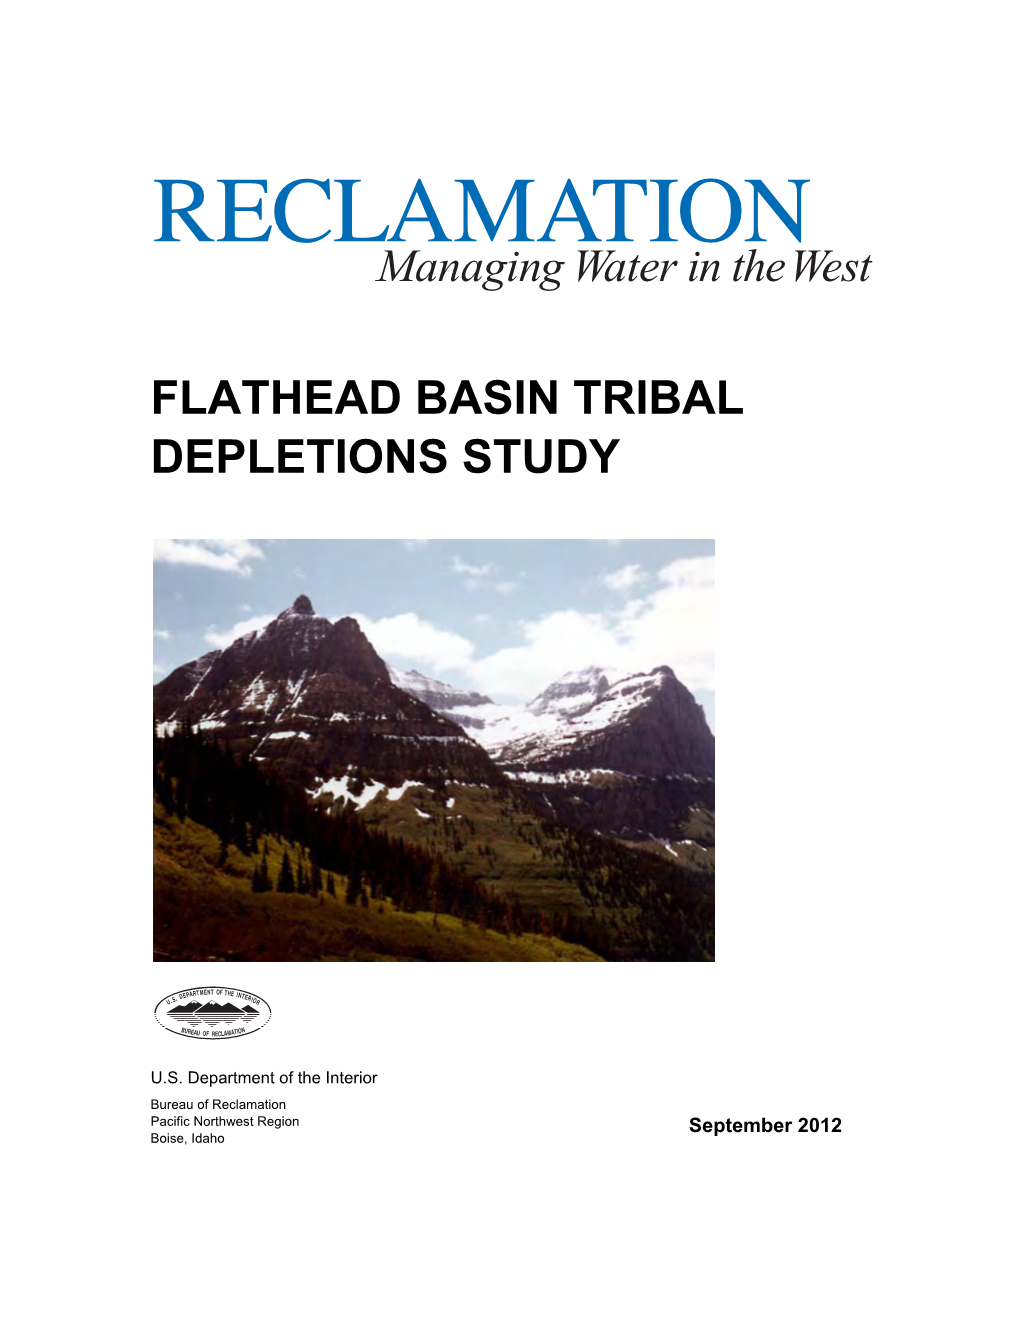 Flathead Basin Tribal Depletions Study